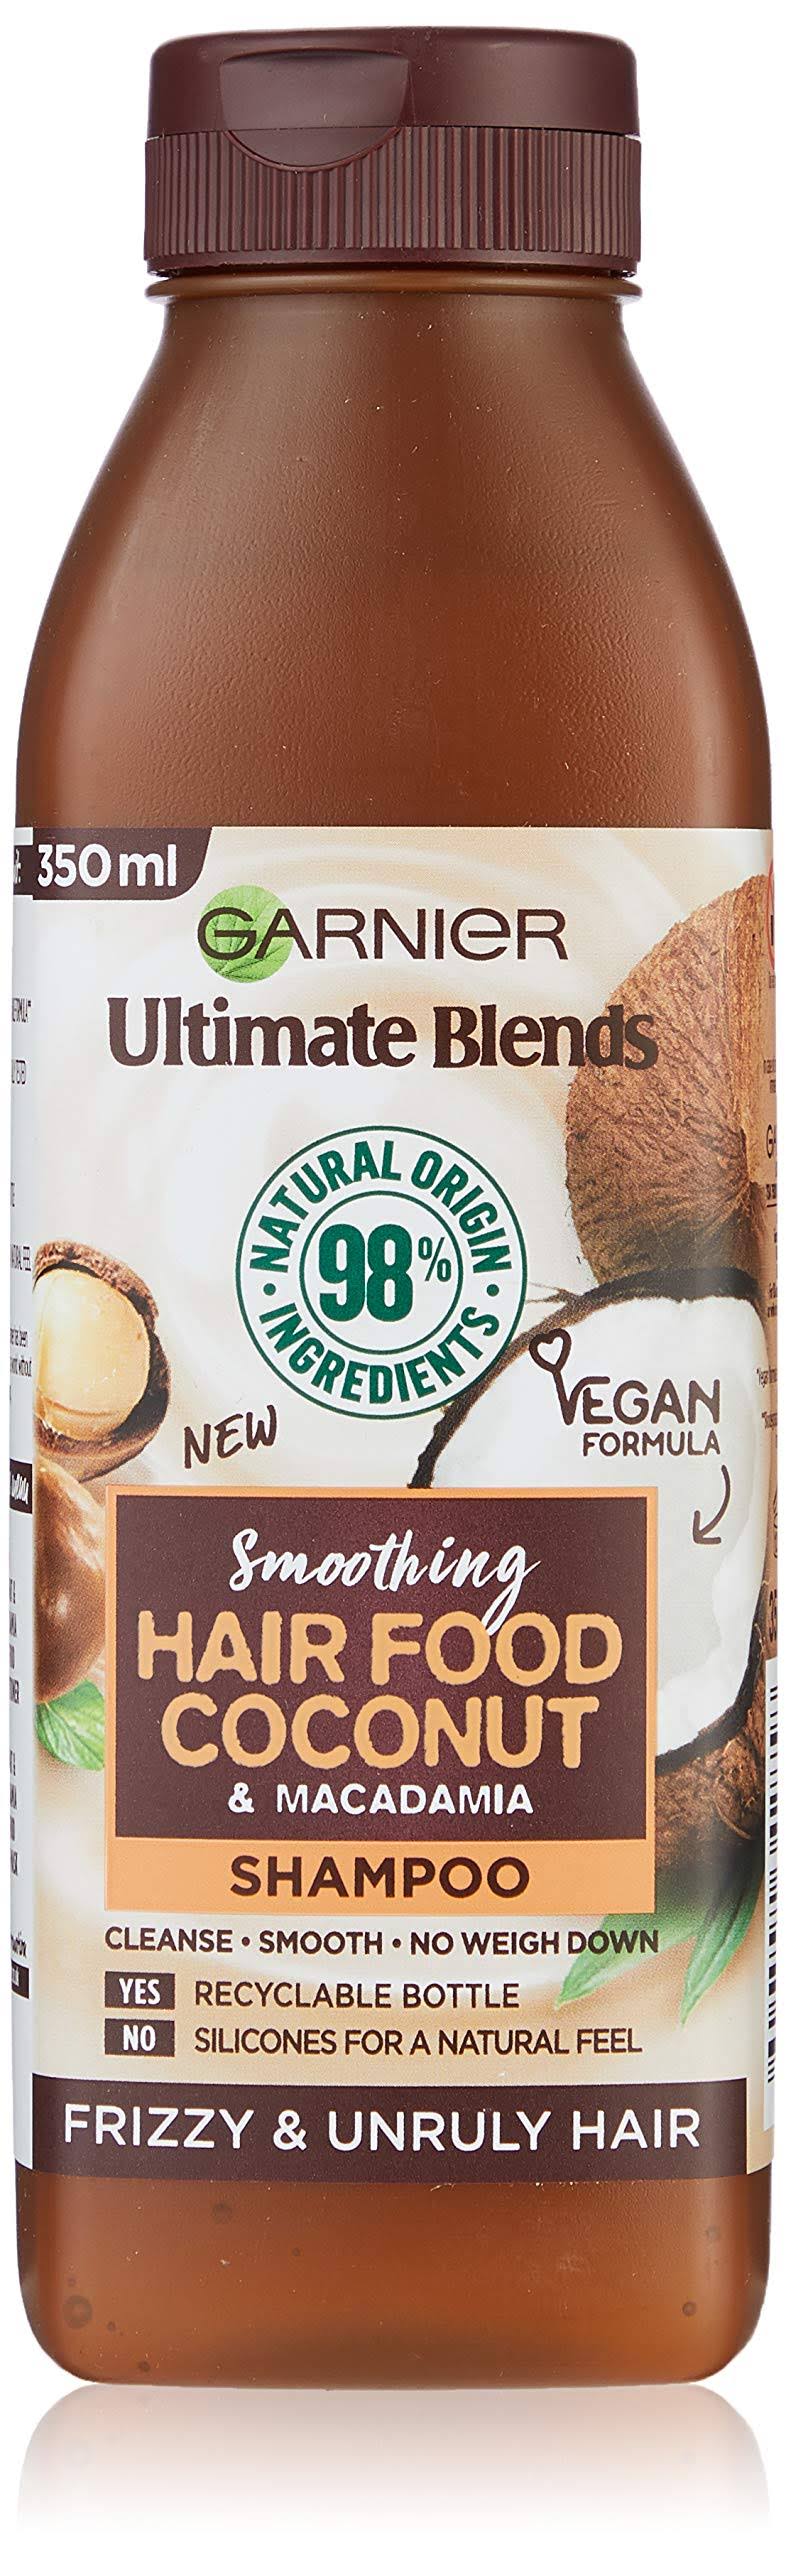 Garnier - Ultimate Blends Smoothing Hair Food Coconut Shampoo 350 ml